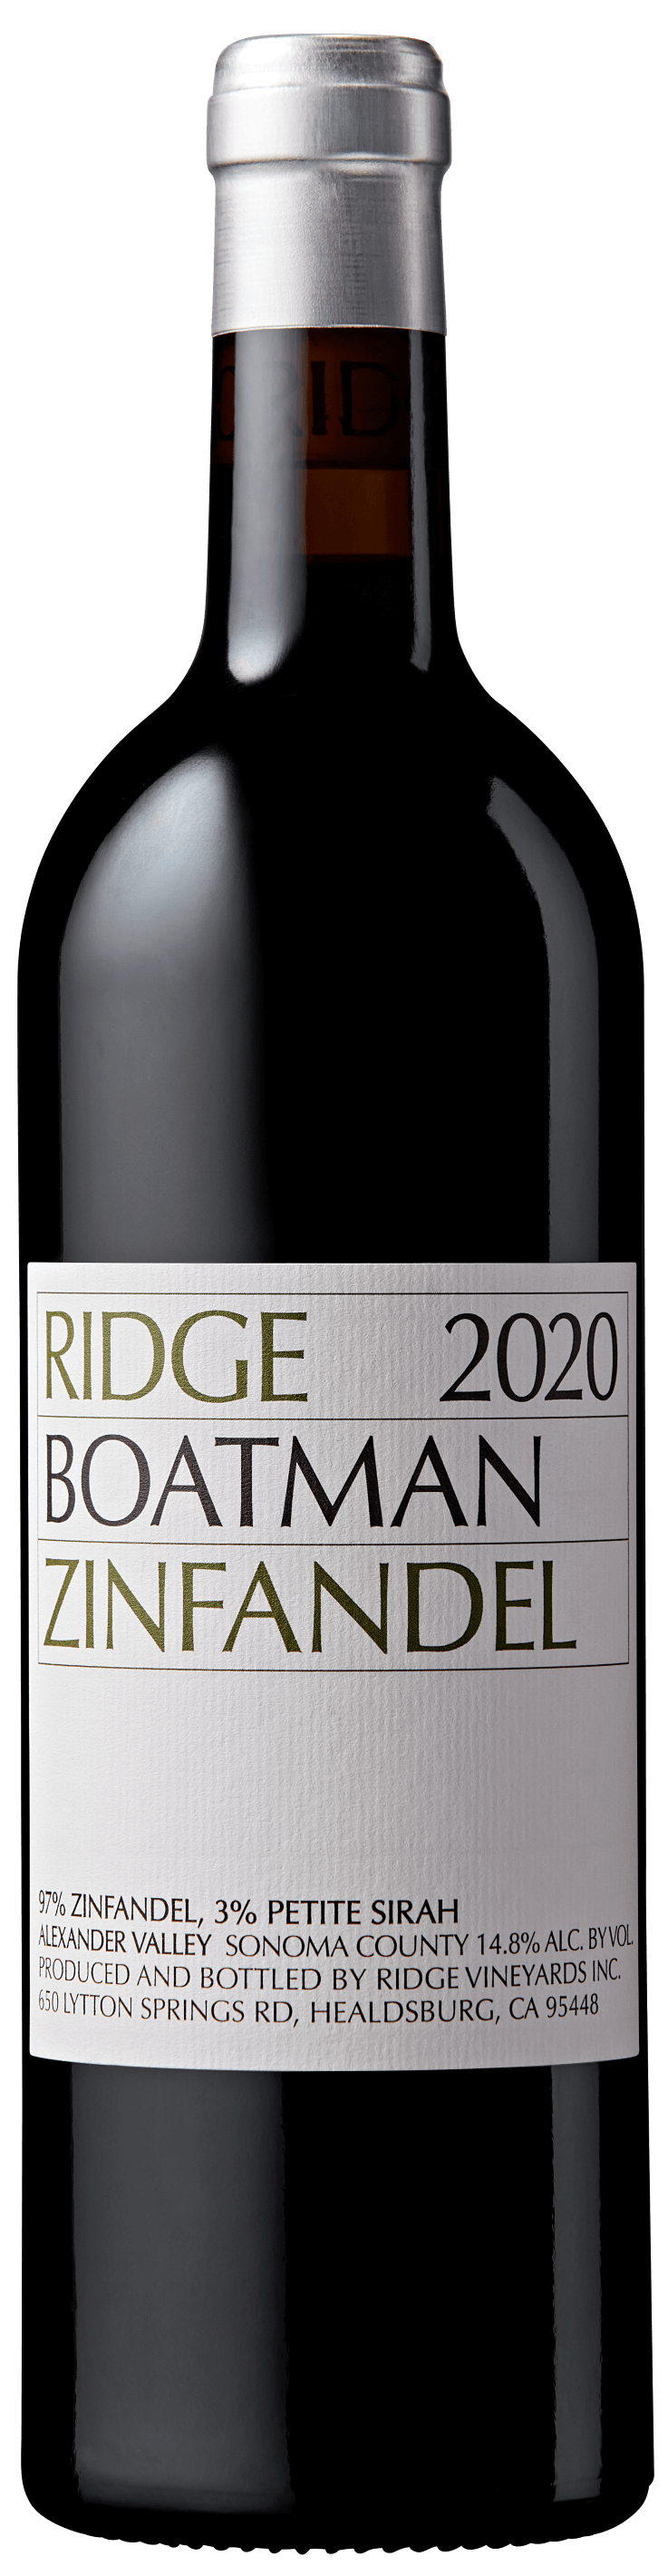 2020 Boatman Zinfandel